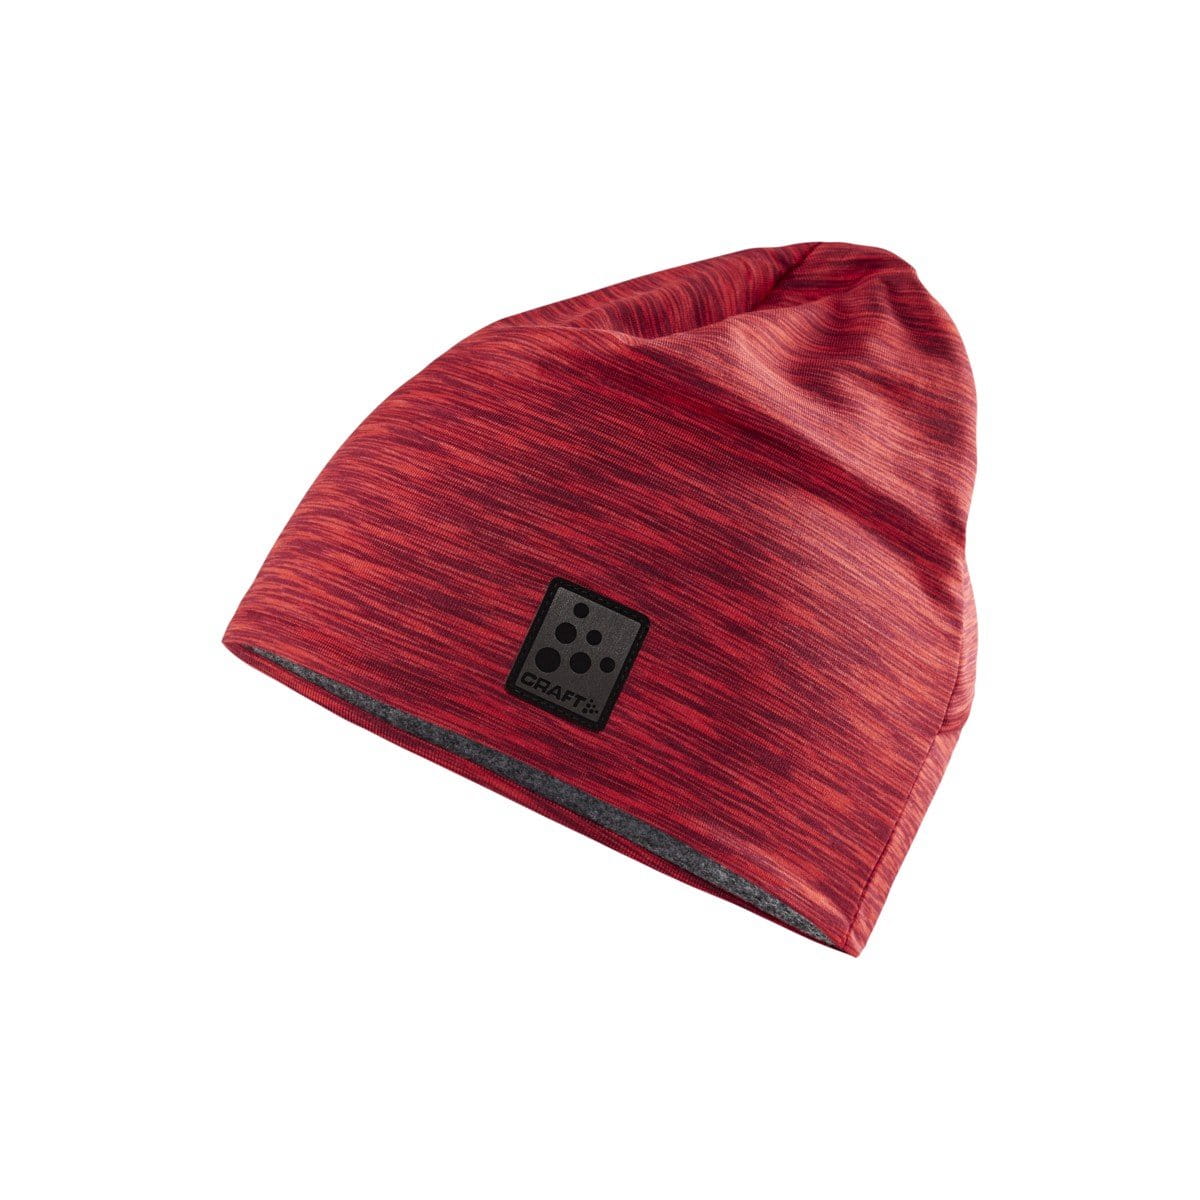 Príjemná a funkčná čiapka Craft Čepice Microfleece Ponytail červená